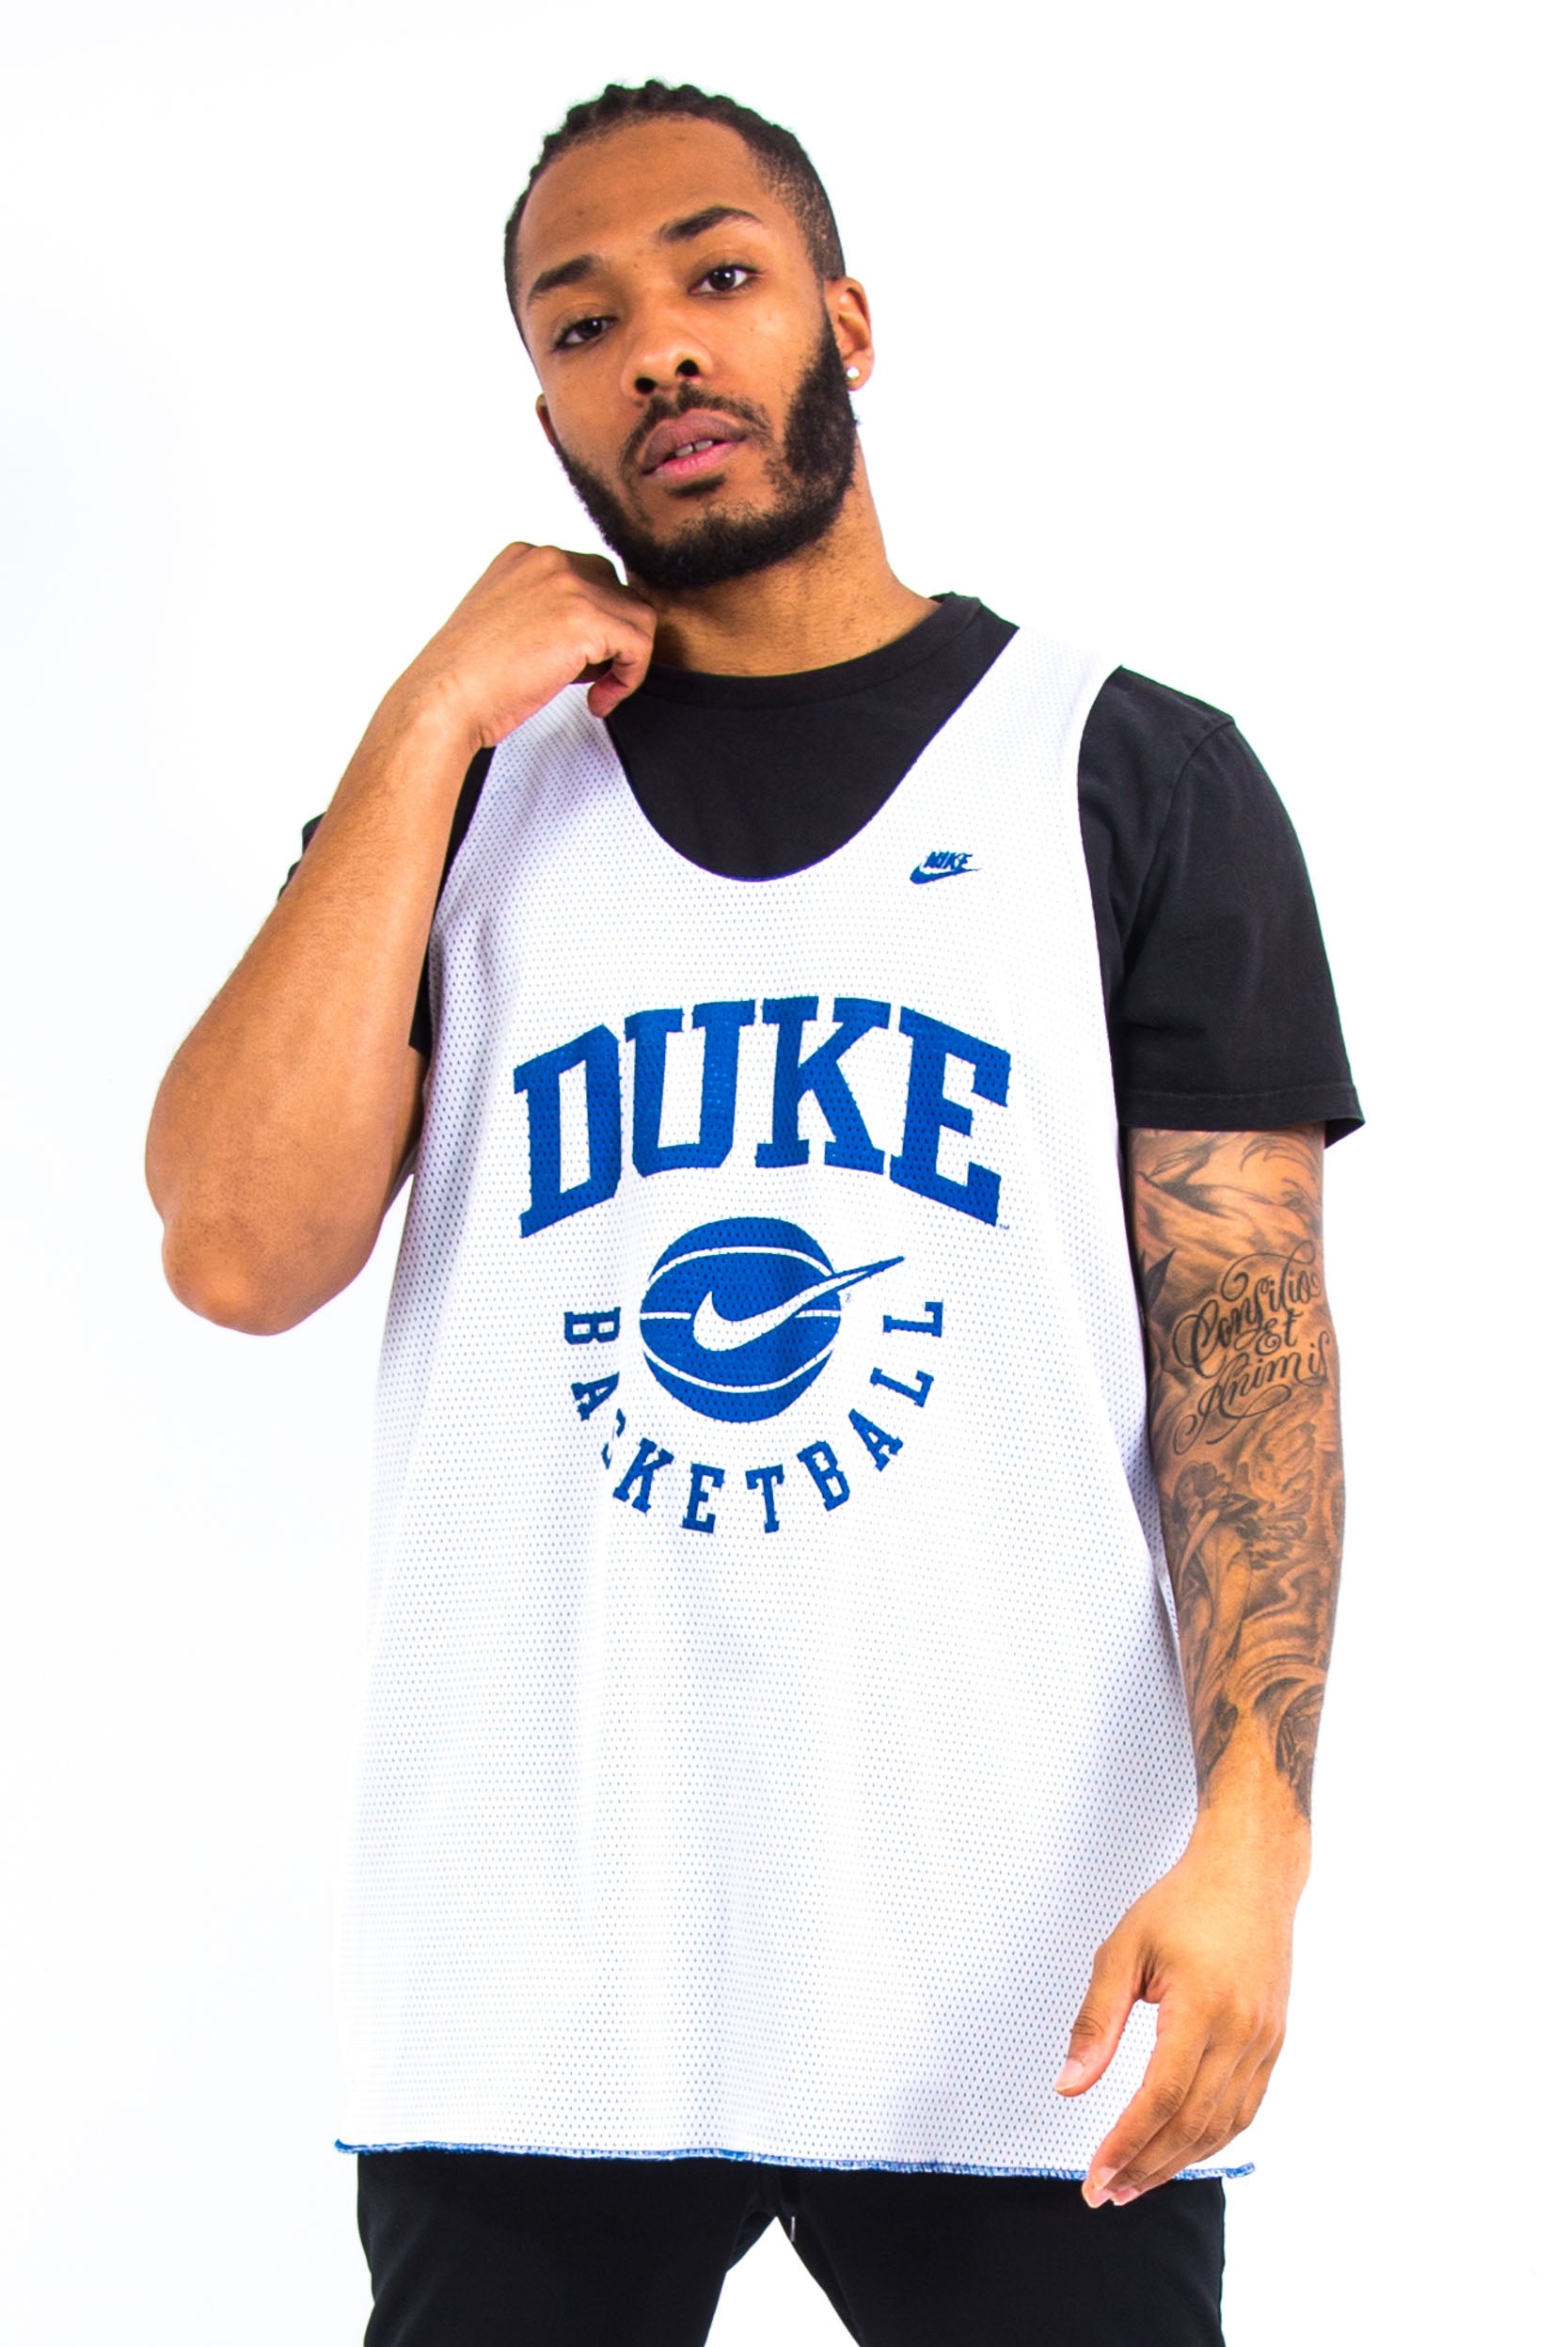 Nike Boy's M Duke Blue Devils Reversible Basketball Jersey Top Blue White 872382